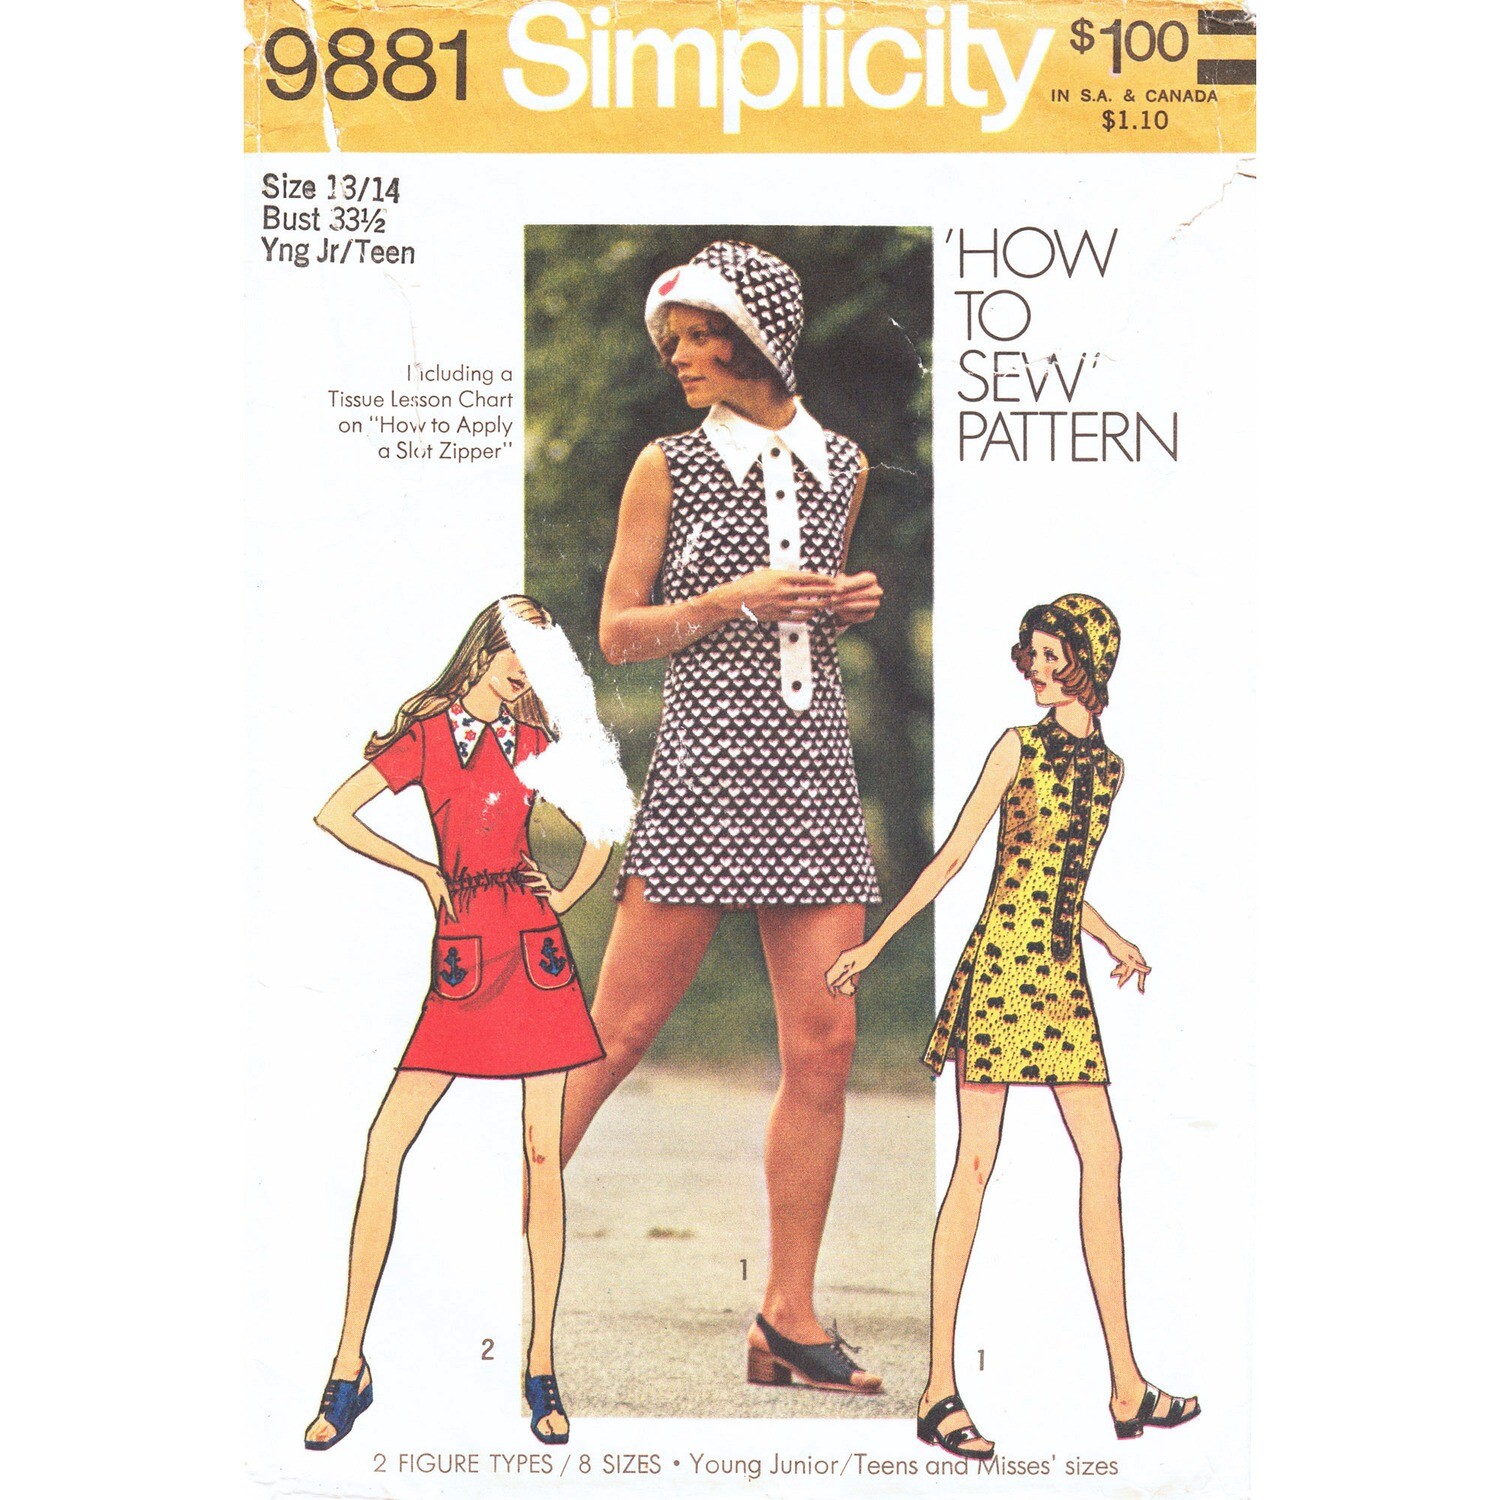 Simplicity 9881 pattern